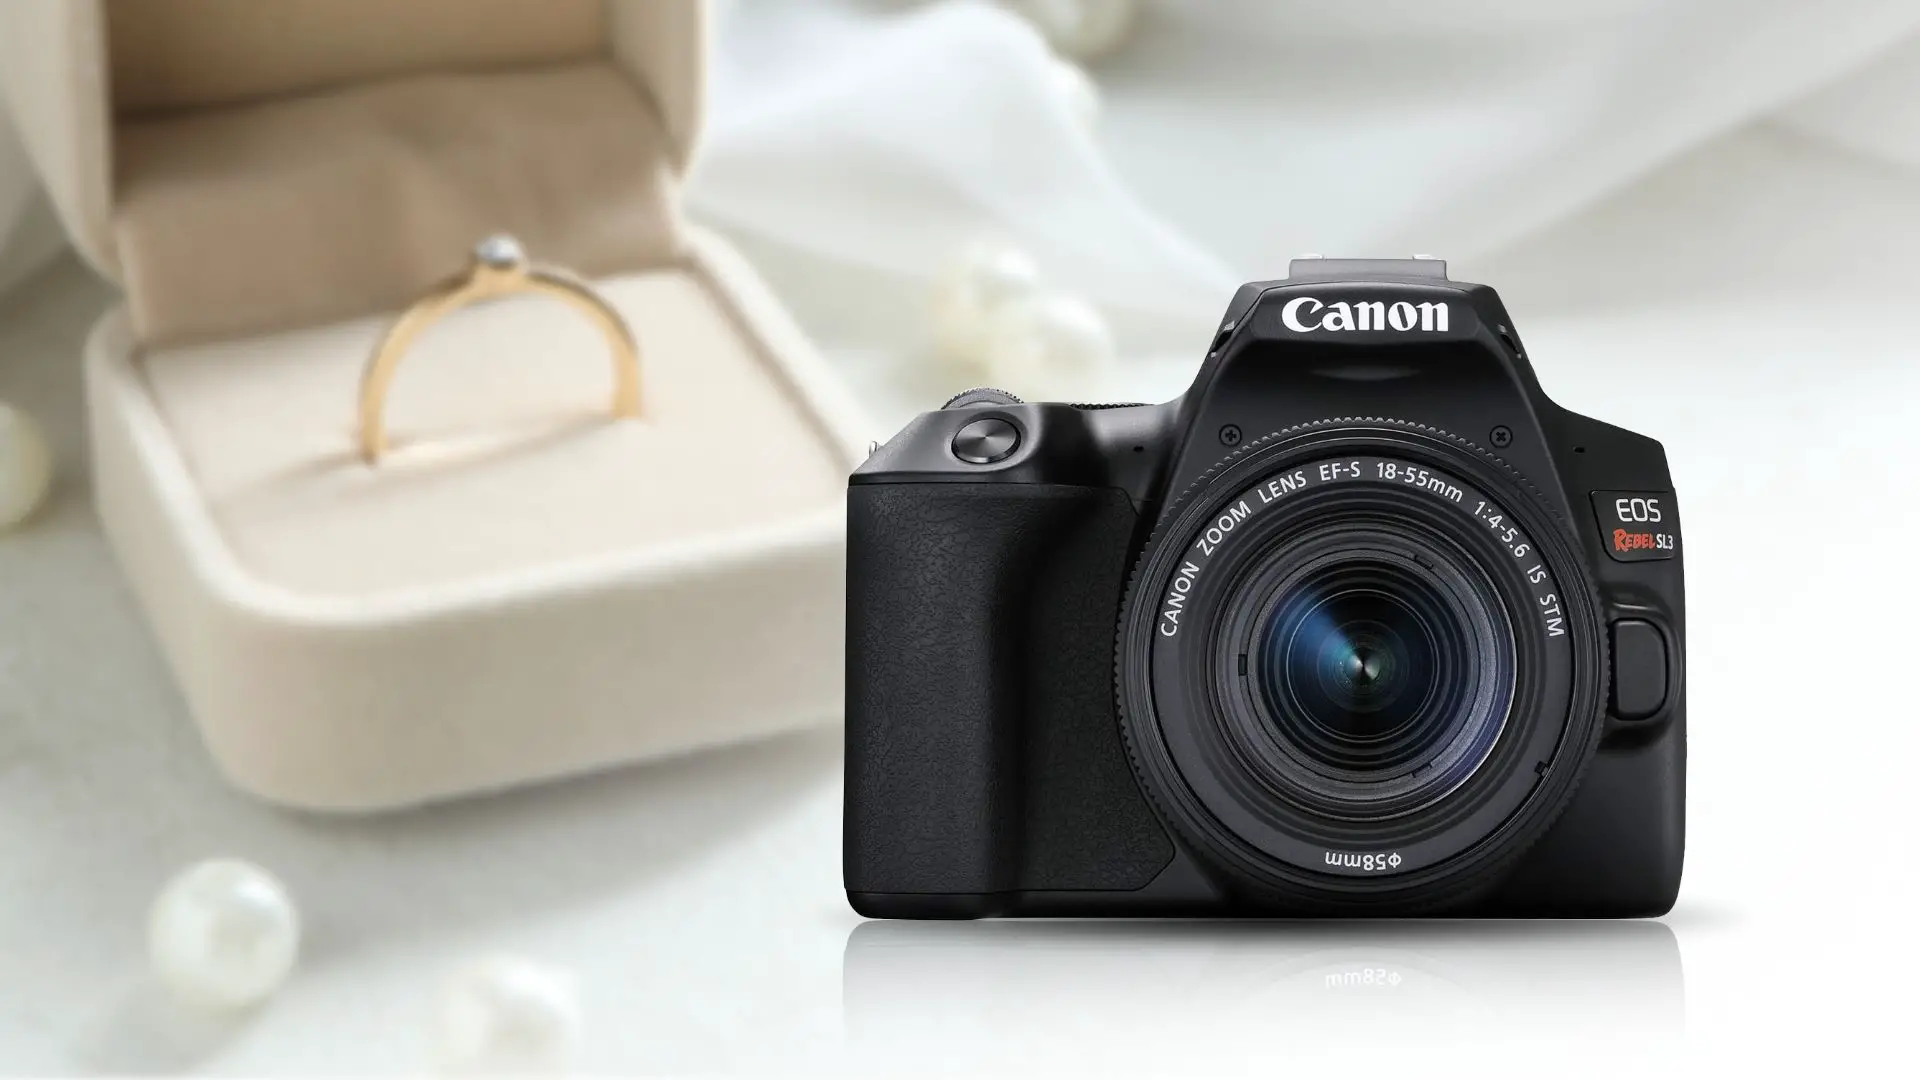 Canon EOS Rebel SL3 Digital SLR Camera with EF-S 18-55mm Lens kit, Built-in Wi-Fi